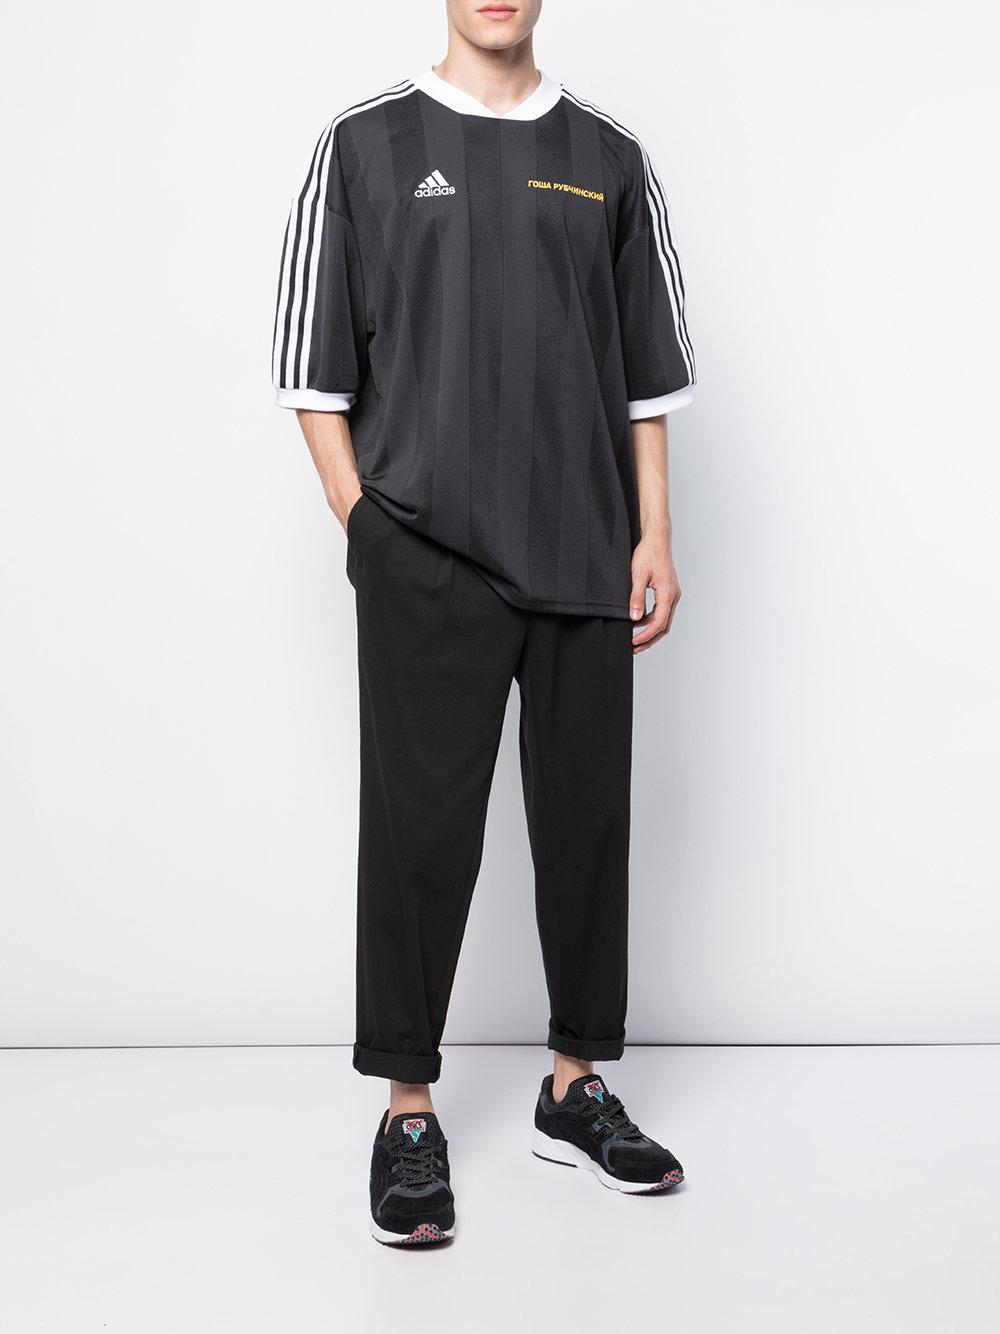 Gosha Rubchinskiy X Adidas Football T-shirt in Black for Men | Lyst UK